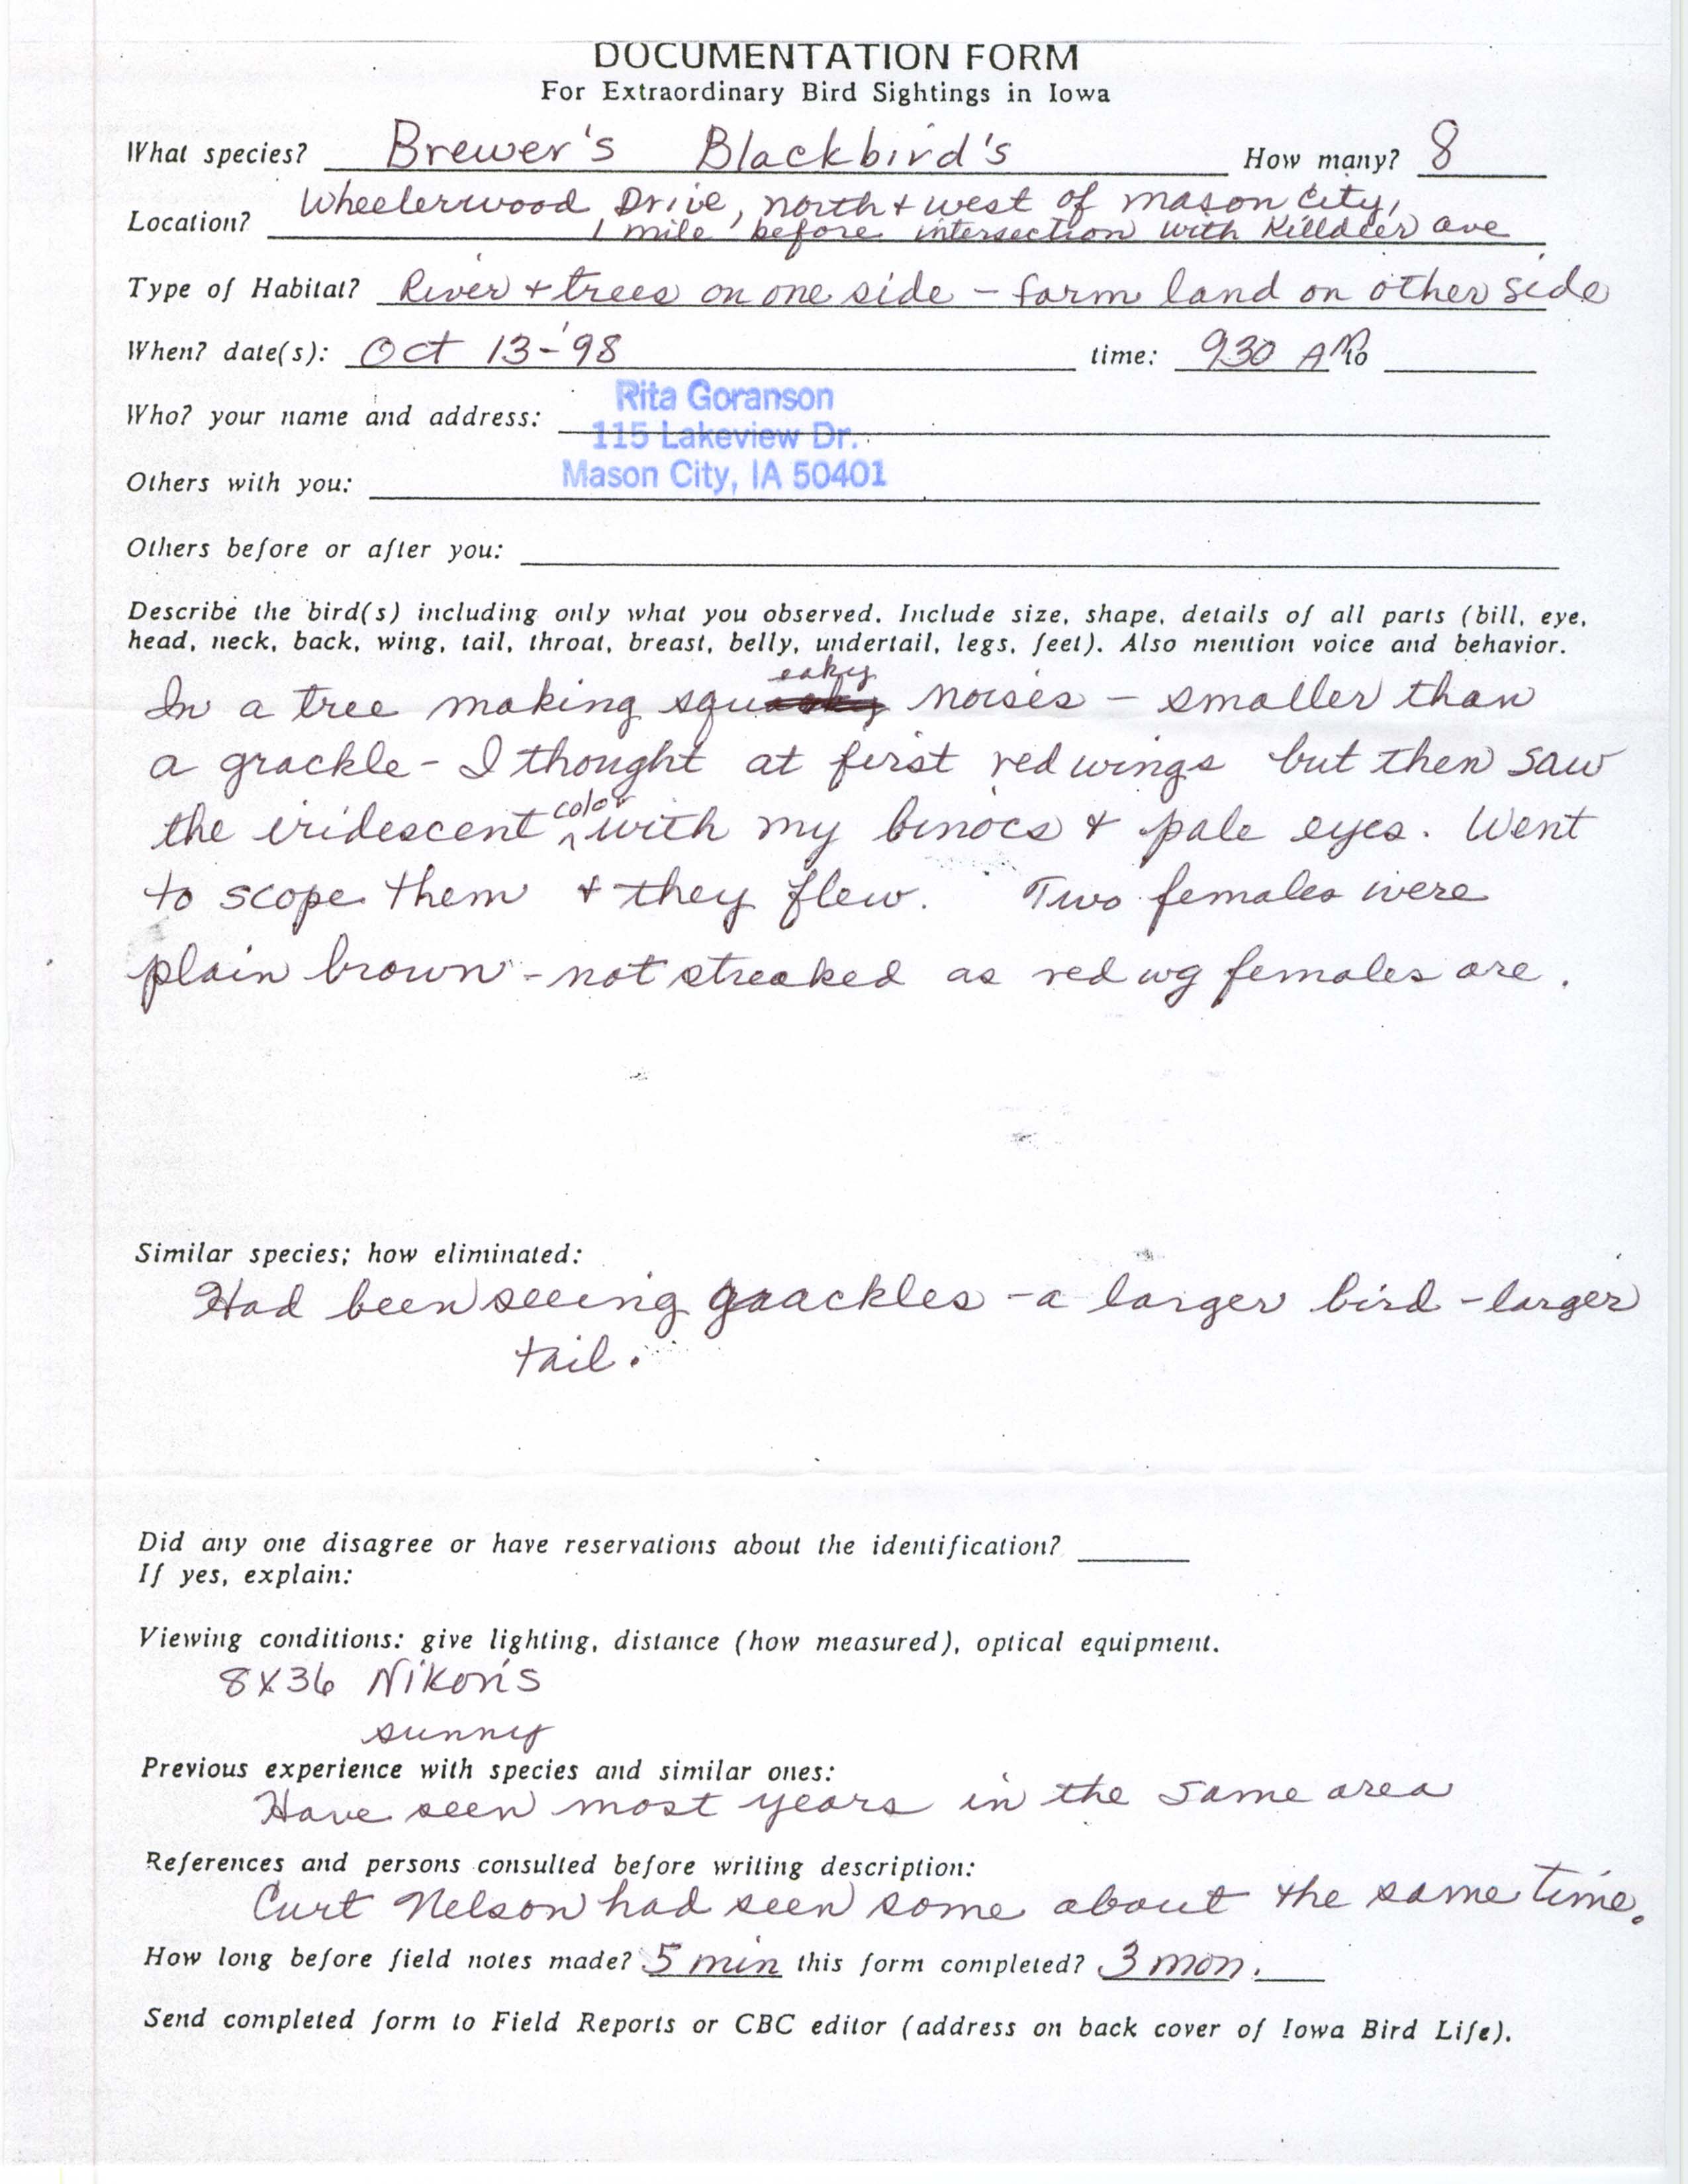 Rare bird documentation form for Brewer's Blackbird northwest of Mason City, 1998